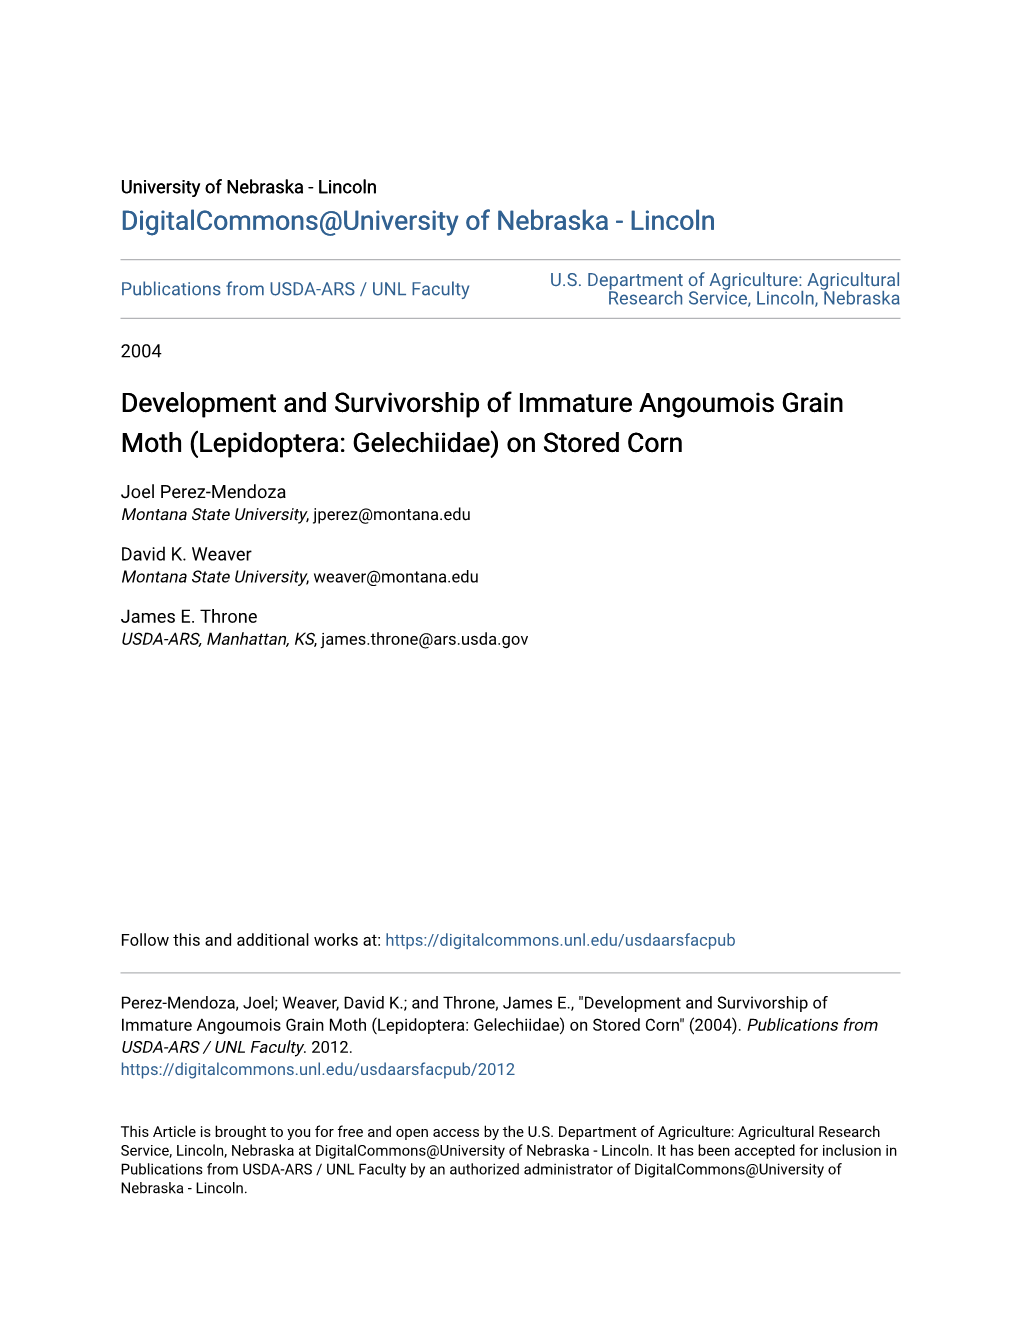 Development and Survivorship of Immature Angoumois Grain Moth (Lepidoptera: Gelechiidae) on Stored Corn